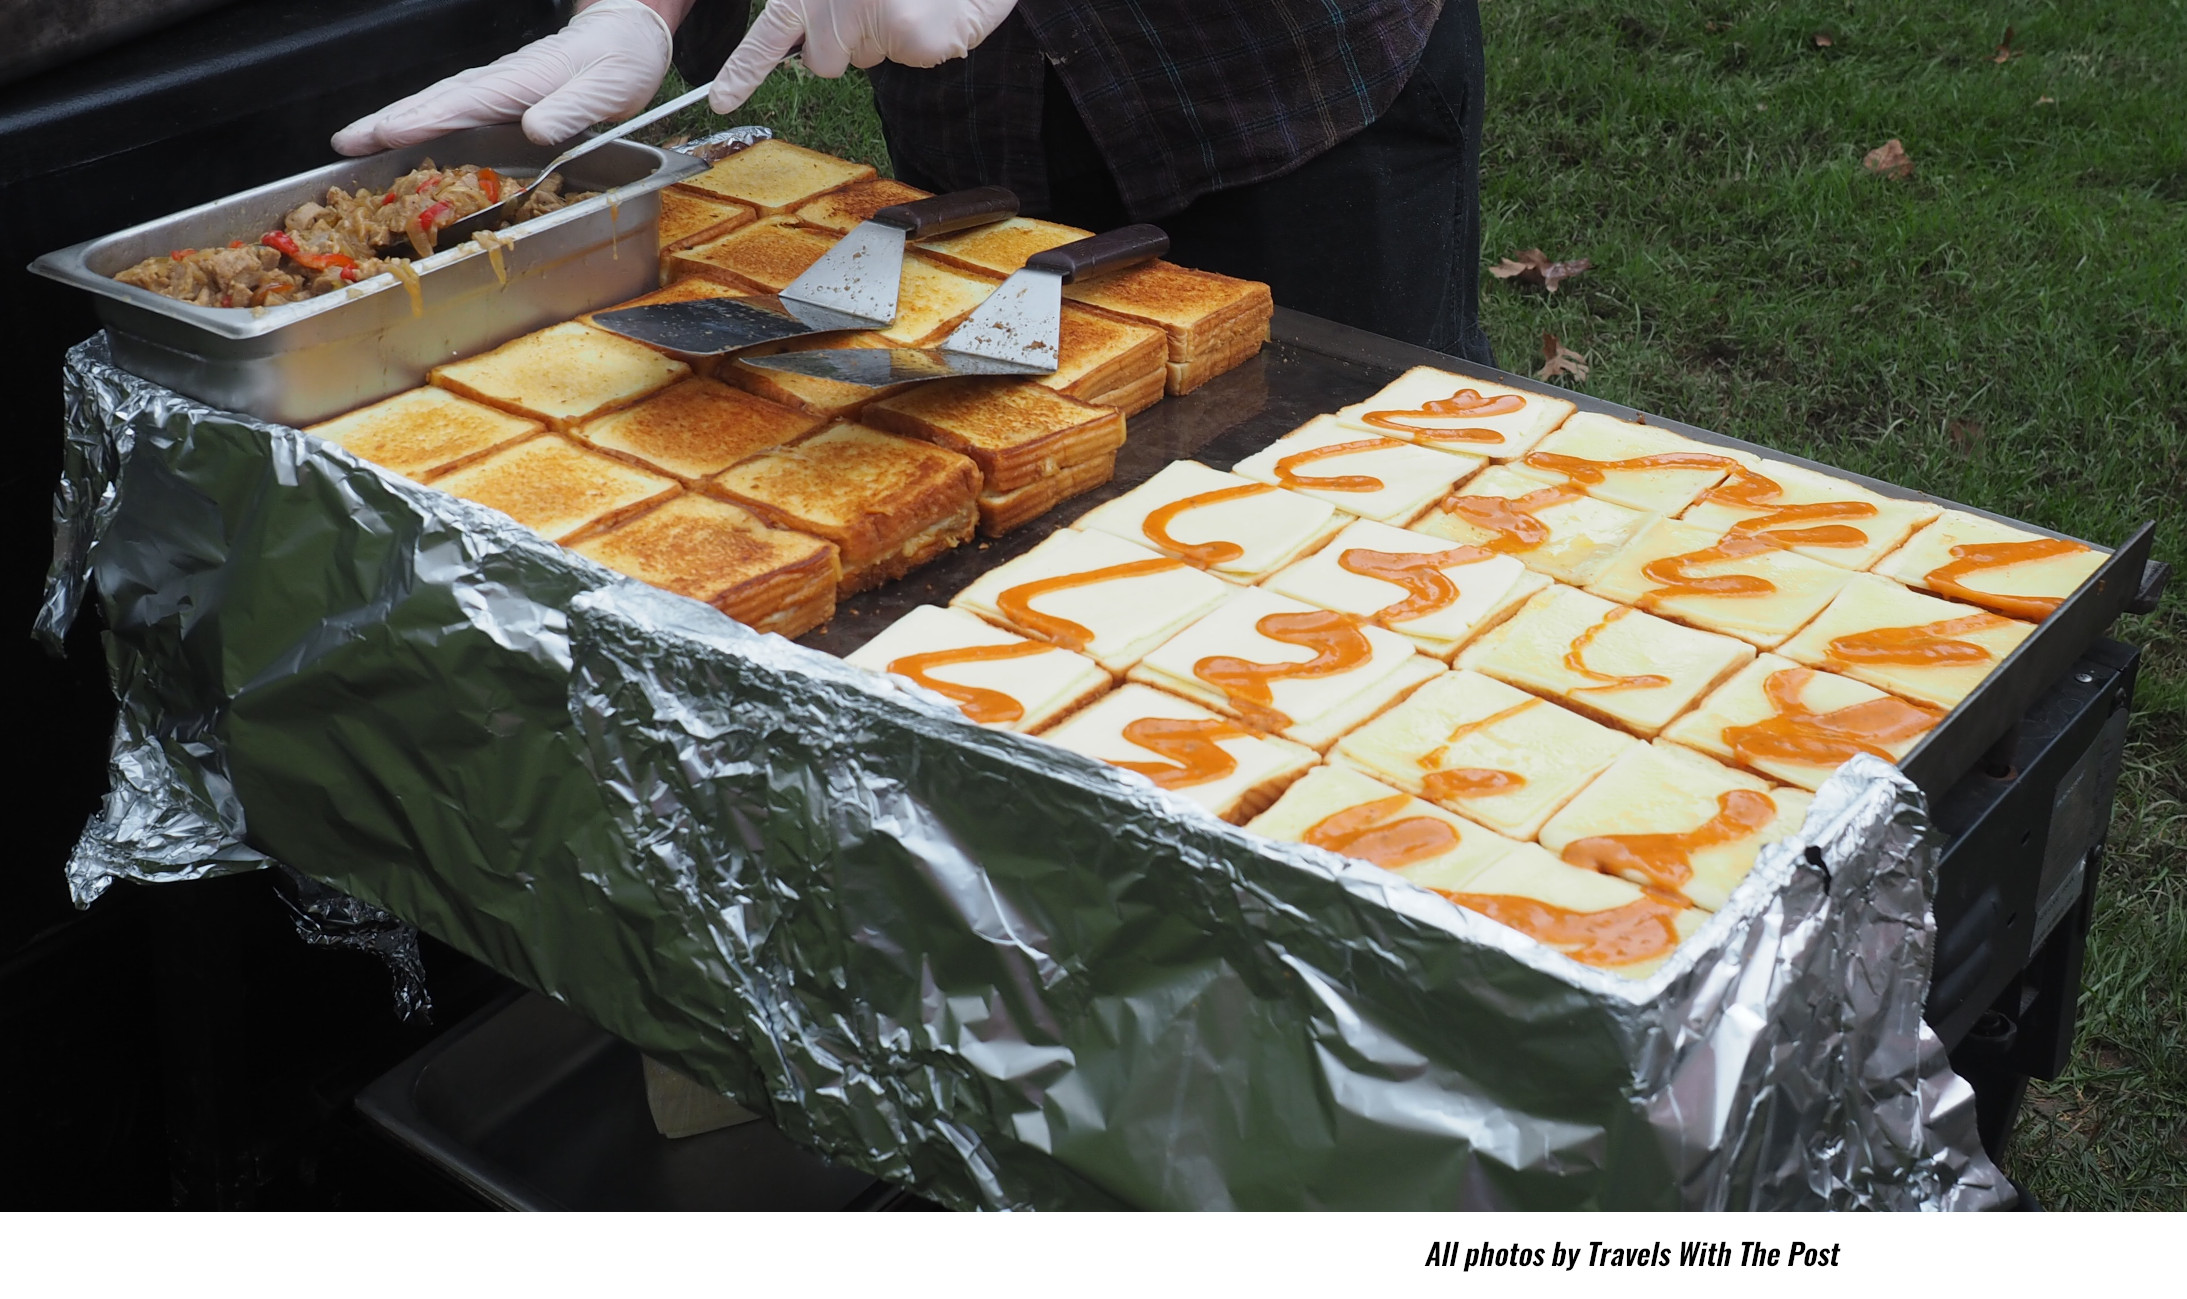 Grilled Cheese Gooey-ness Fills Pottstown in October